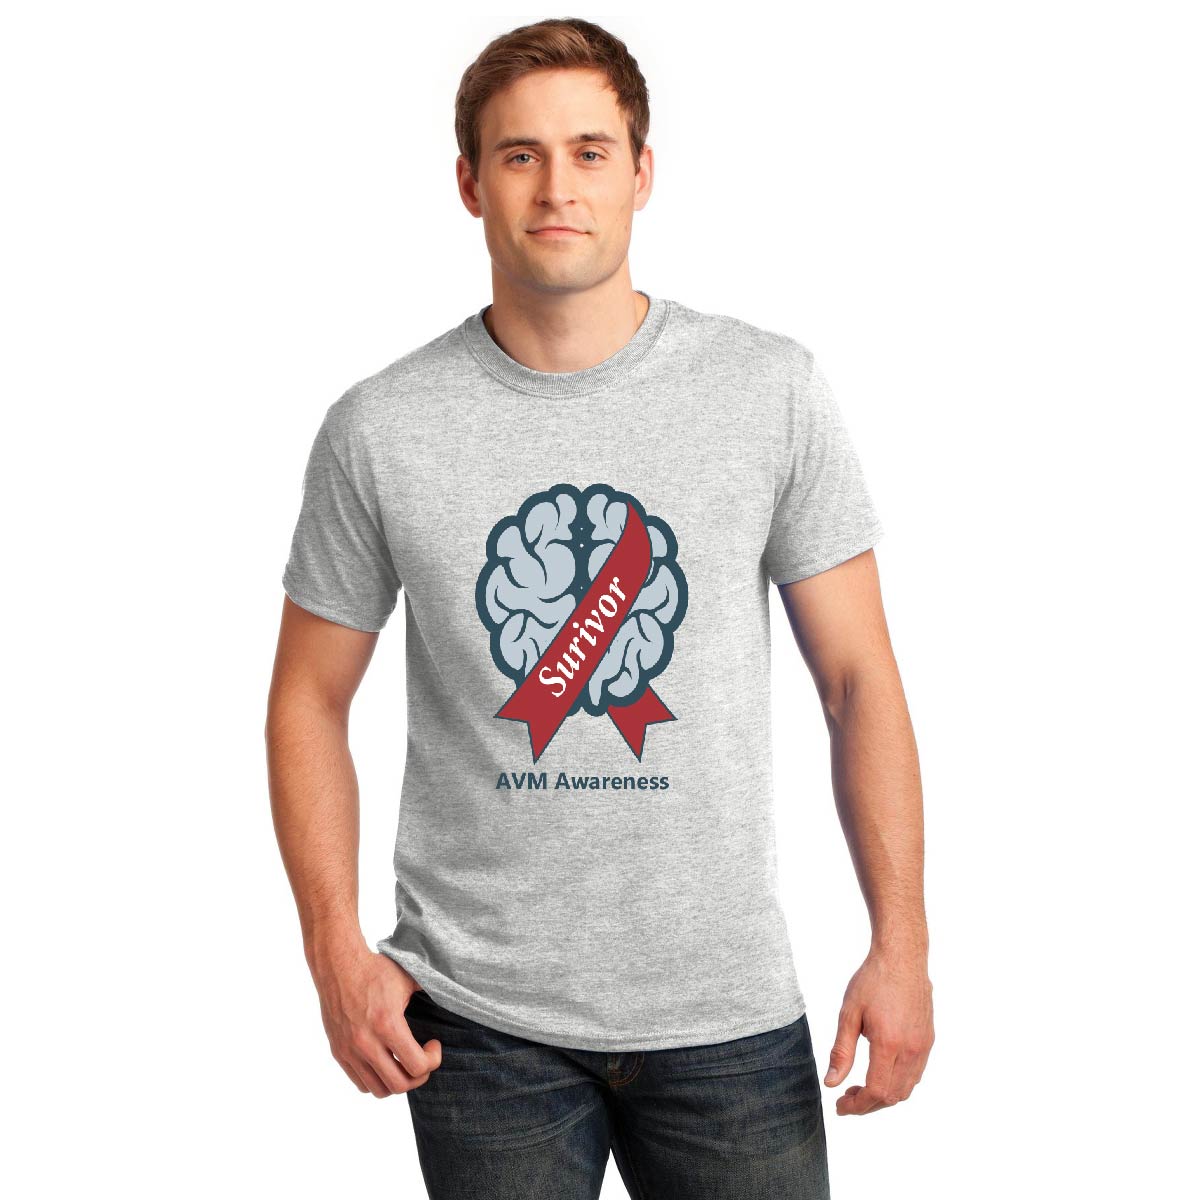 https://www.joeniekrofoundation.com/ways-to-give/apparel/attachment/survivor-shirt-image/